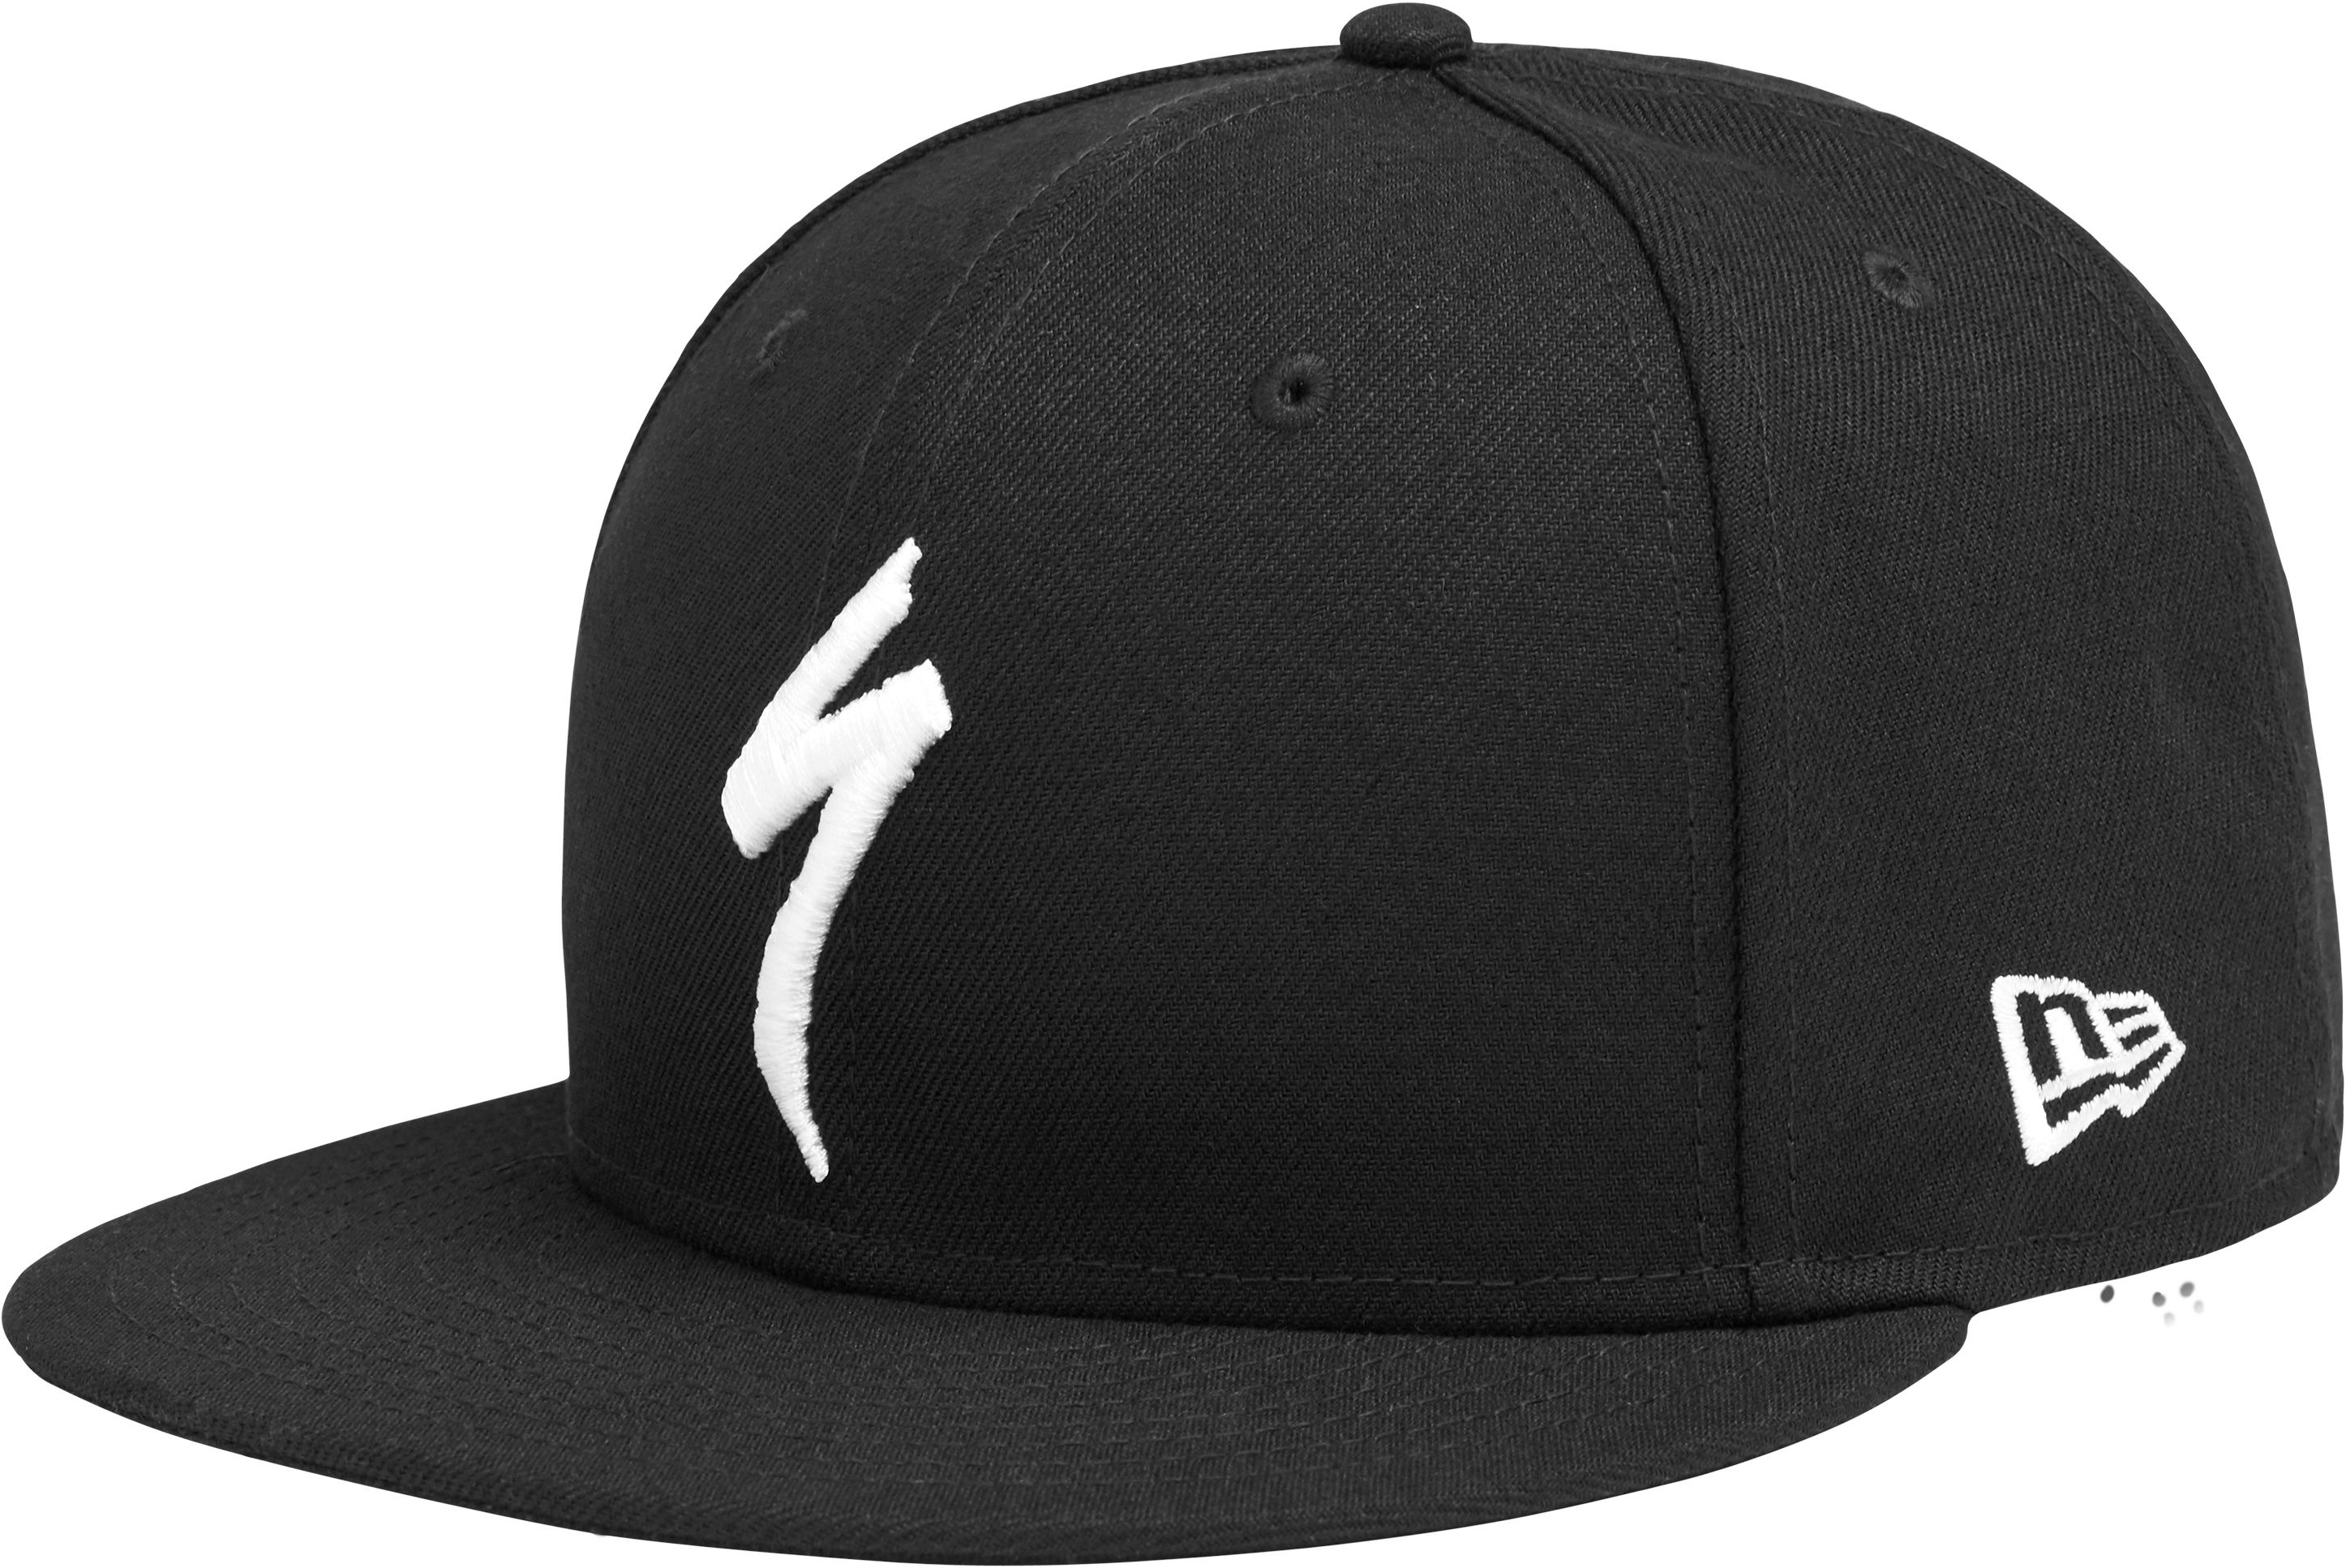 Specialized New Era 9fifty Snapback Hat 2019 - £29.99 | Casual Headwear